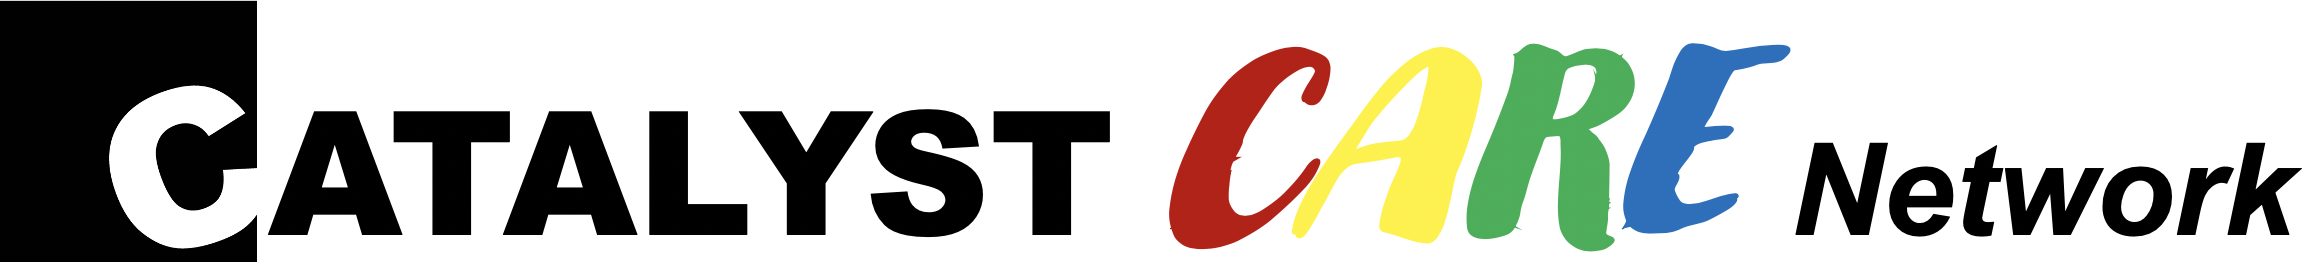 Catalyst Care Network Logo lon